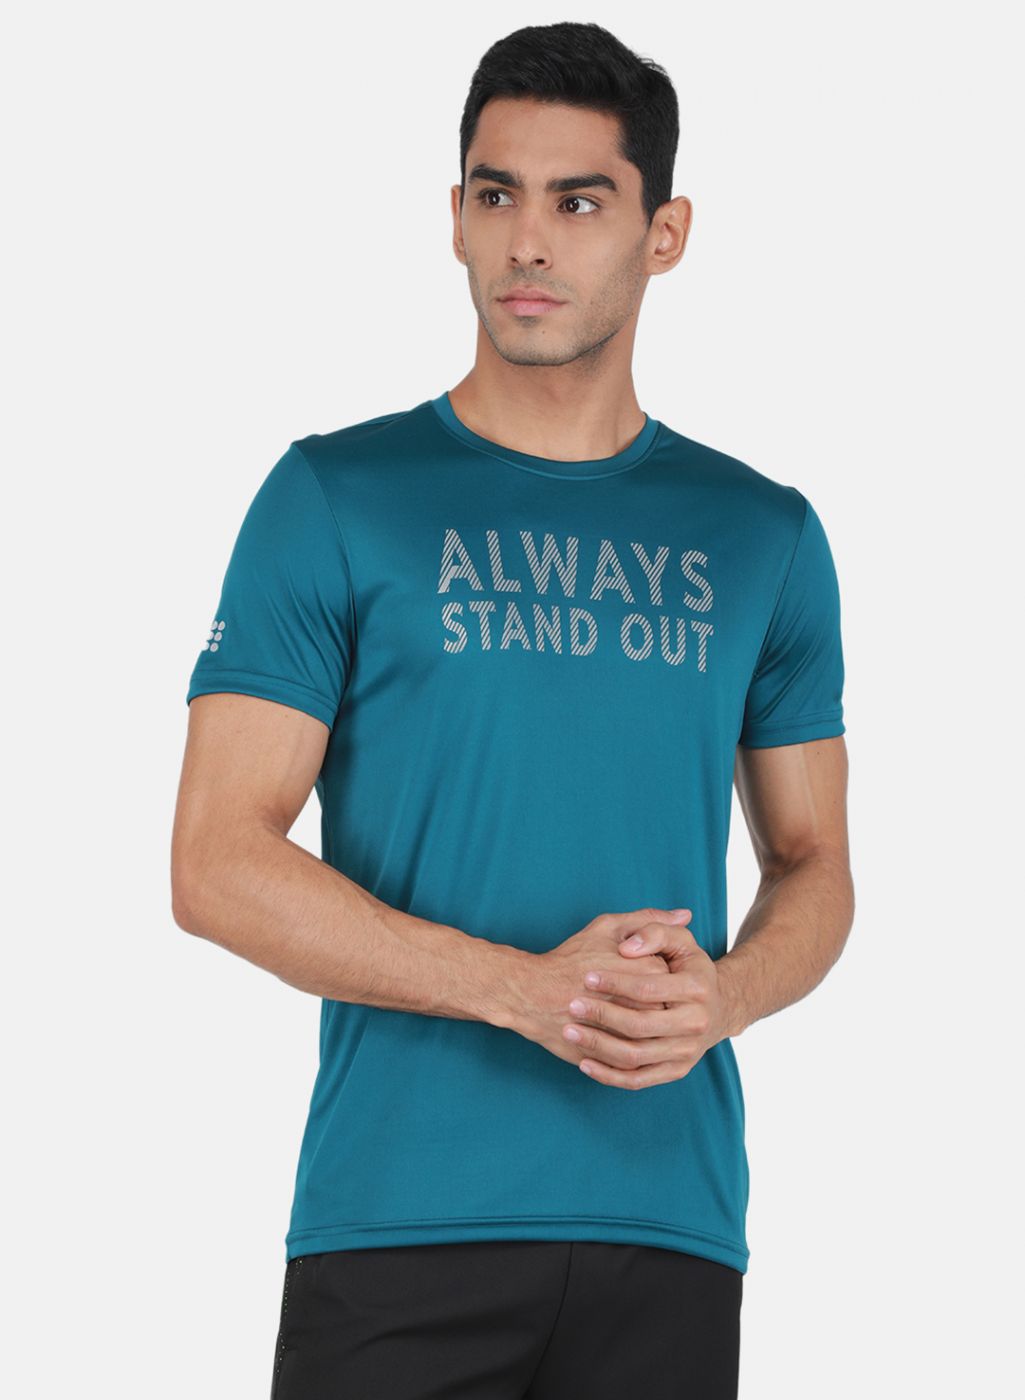 tshirts online india